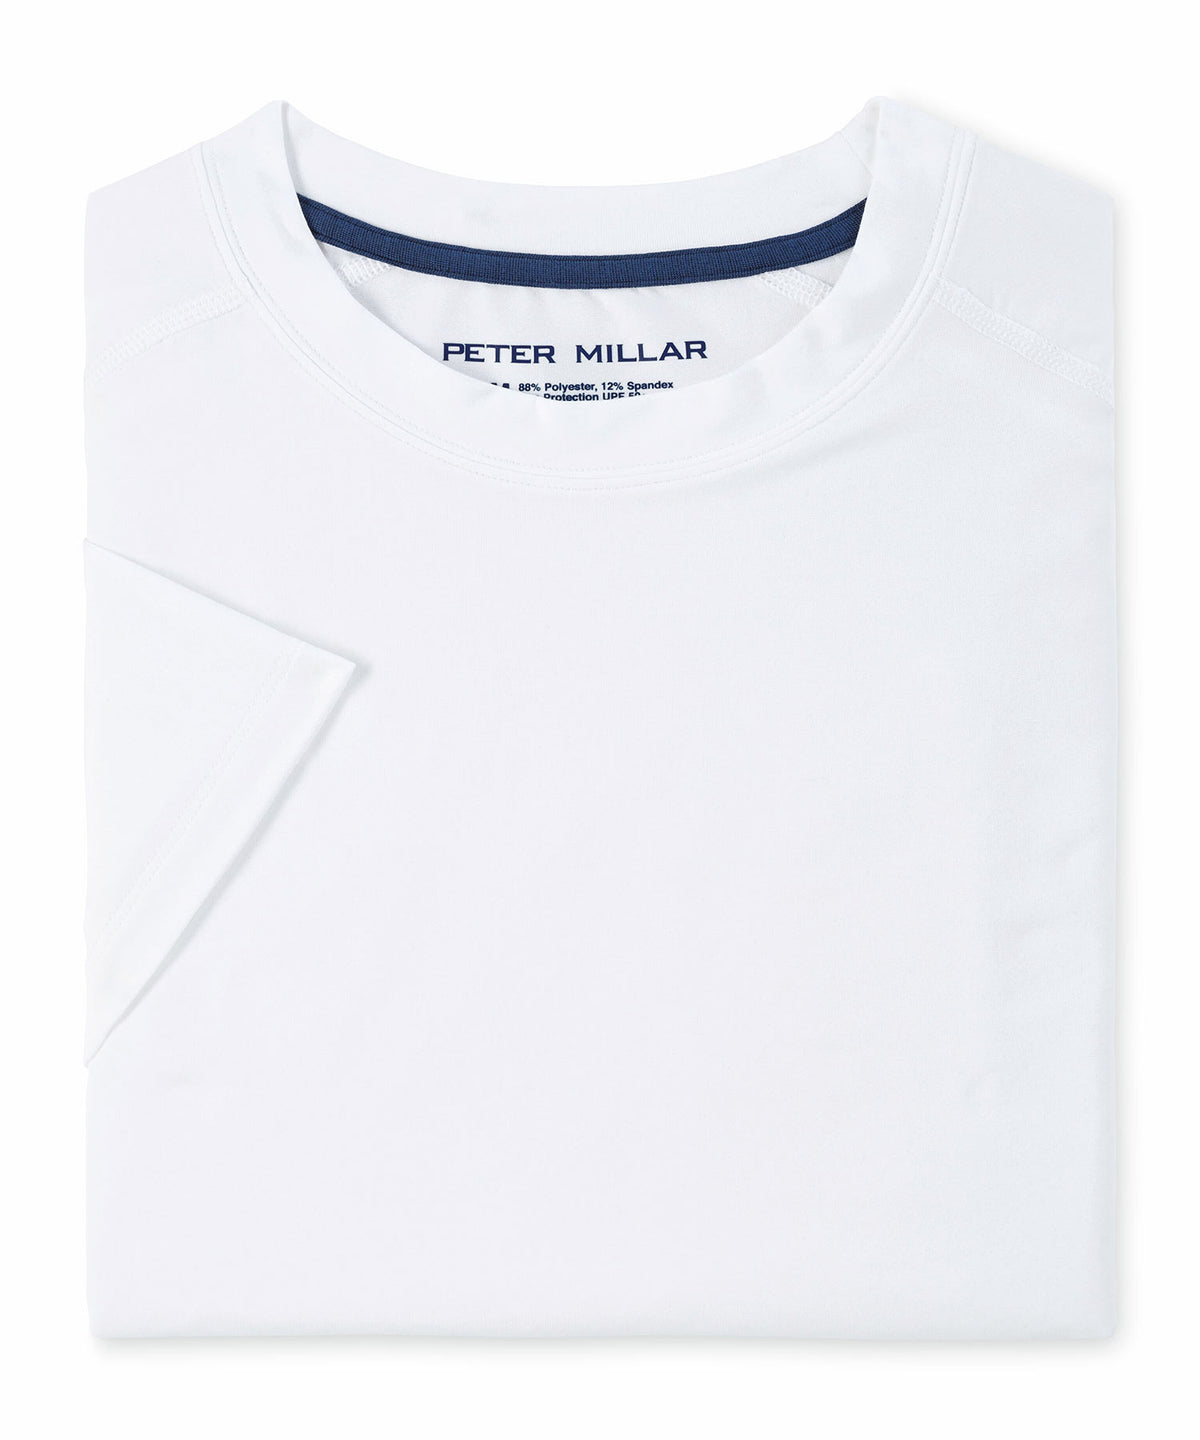 Peter Millar Short Sleeve Aurora Stretch Performance T-Shirt, Men's Big & Tall